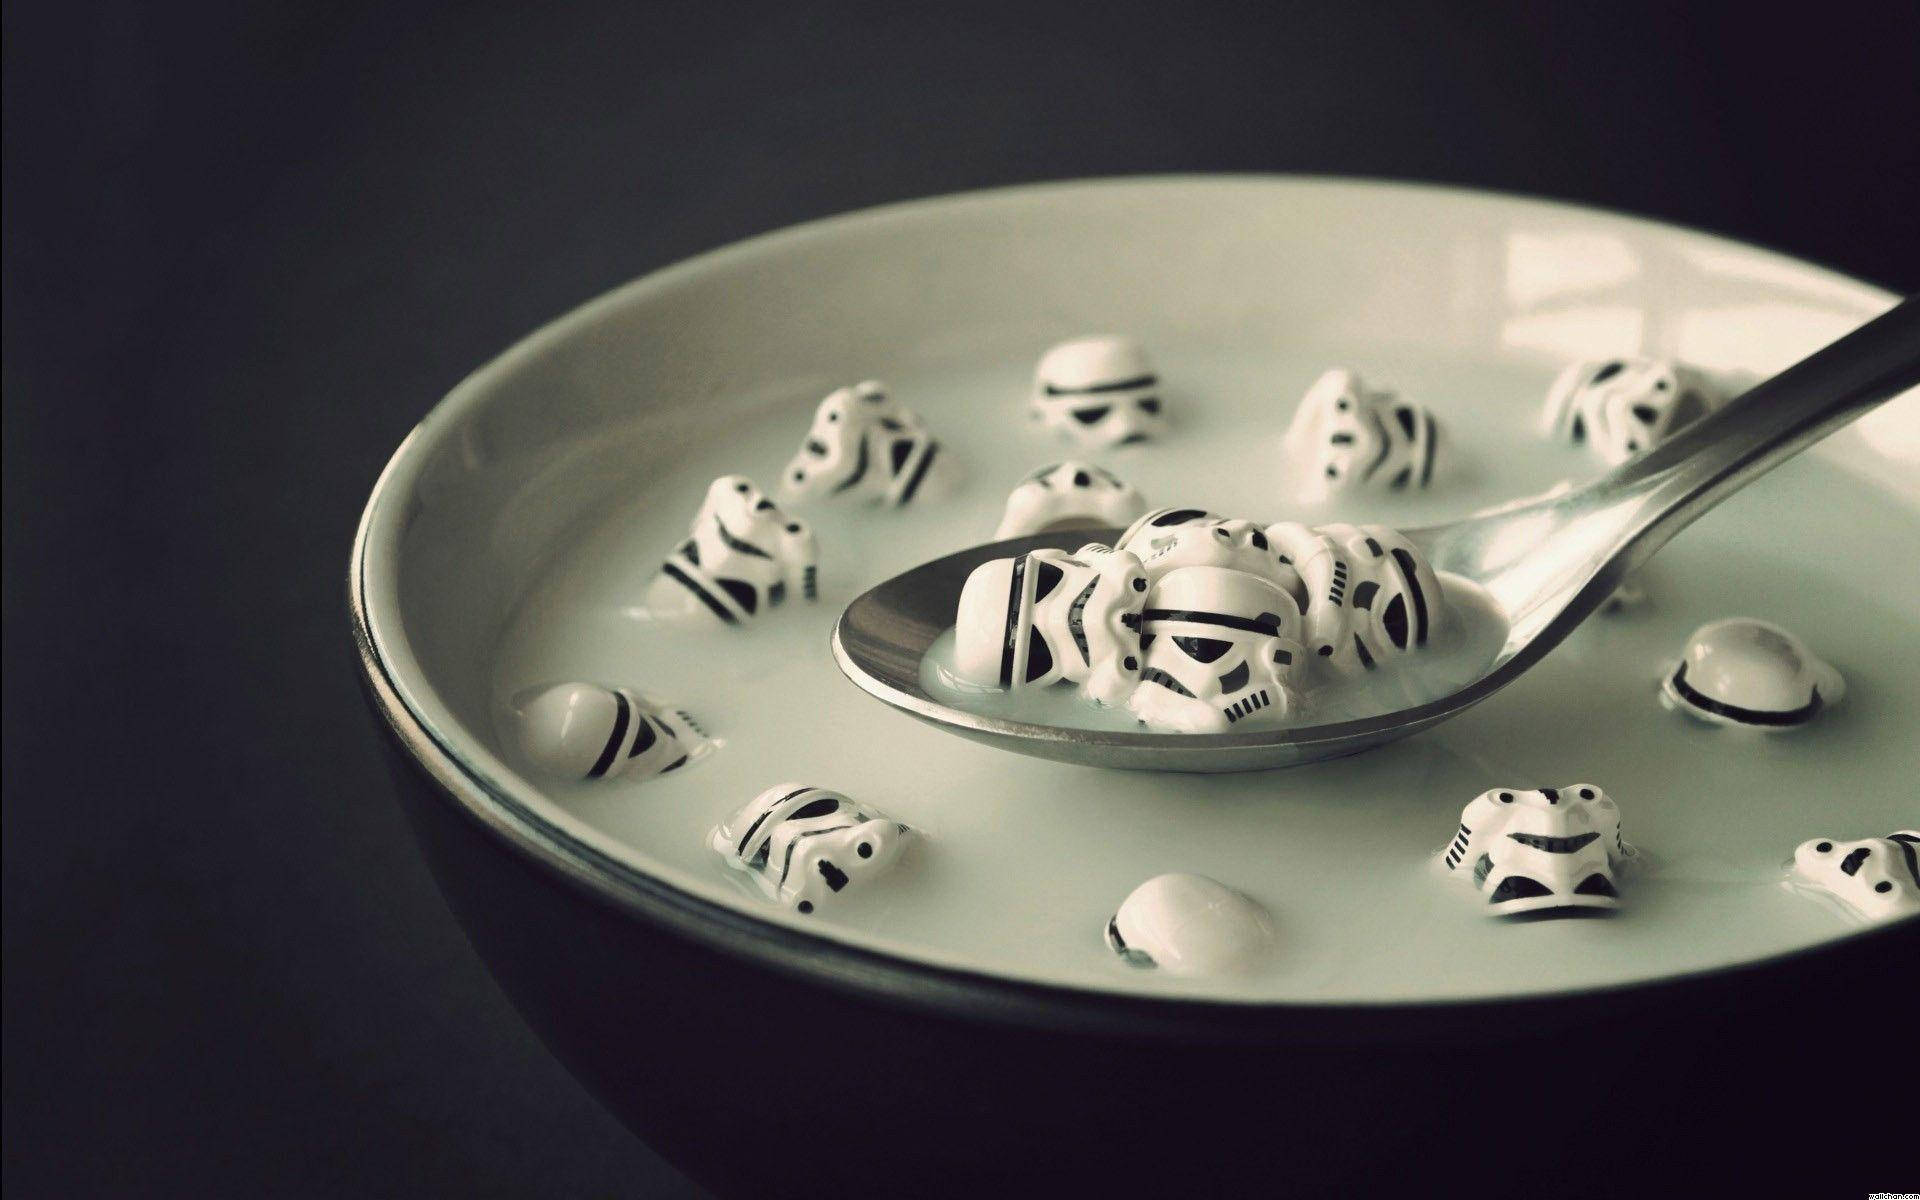 Lego Star Wars Cereal Bowl Wallpaper